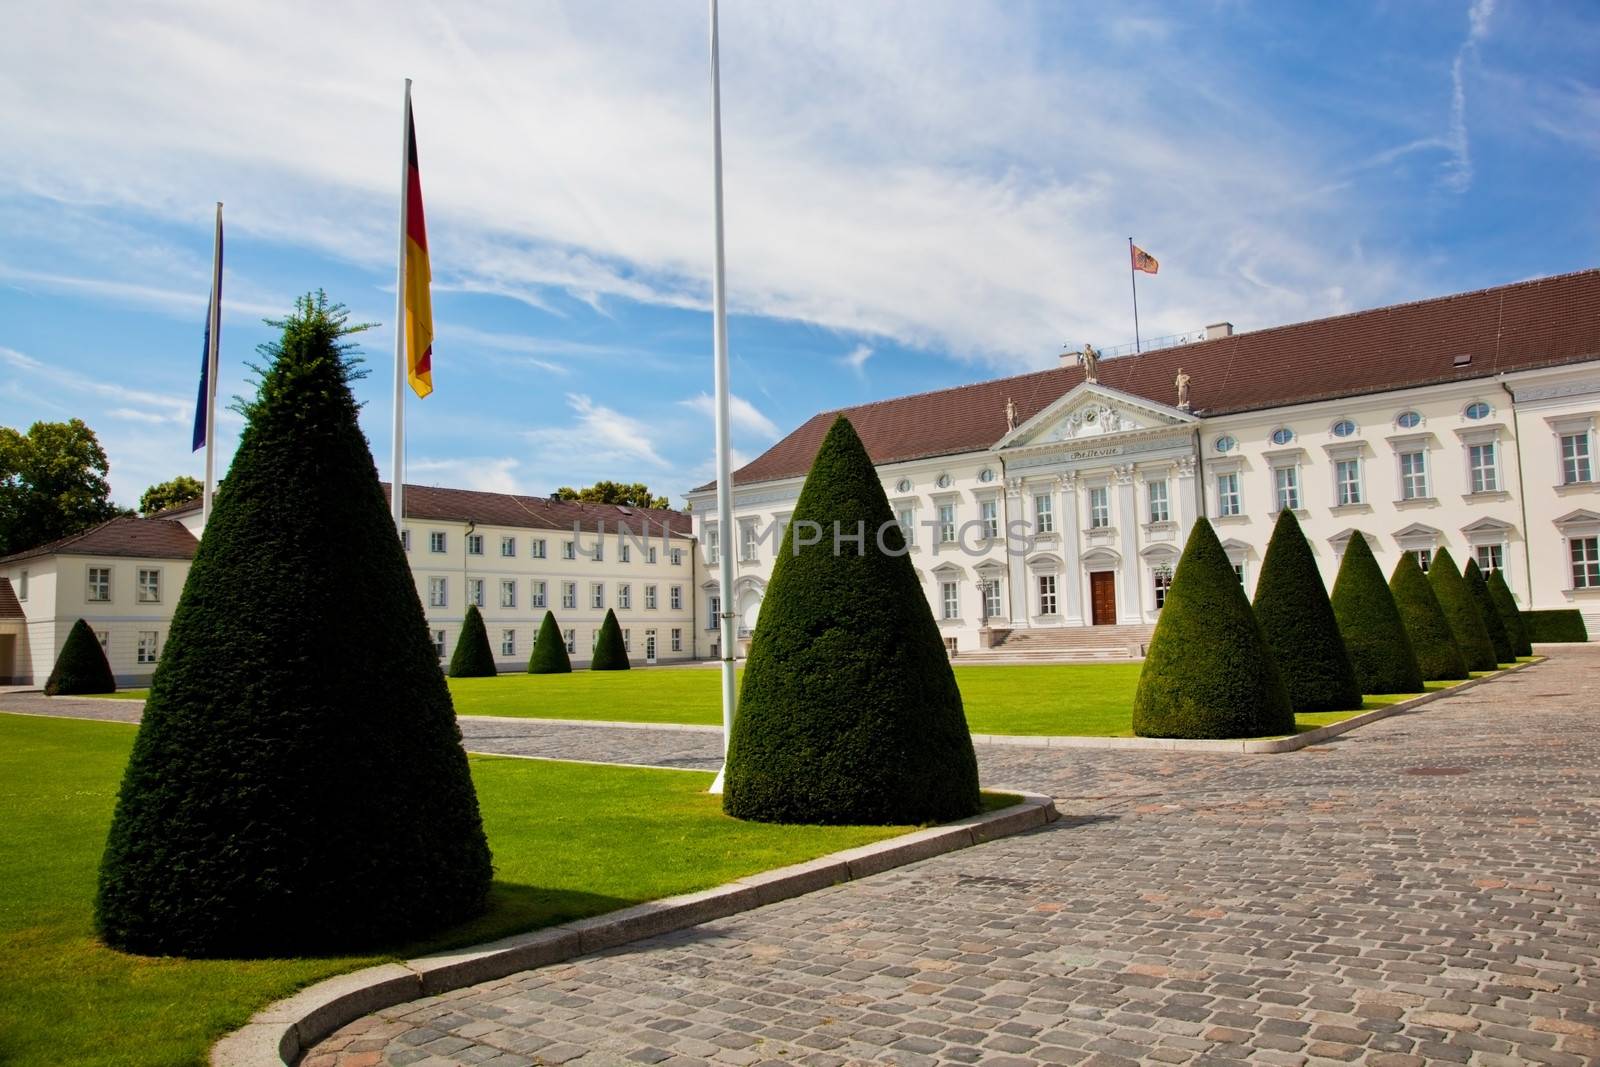 Schloss Bellevue, the Presidential palace in Berlin, Germany. Garden view